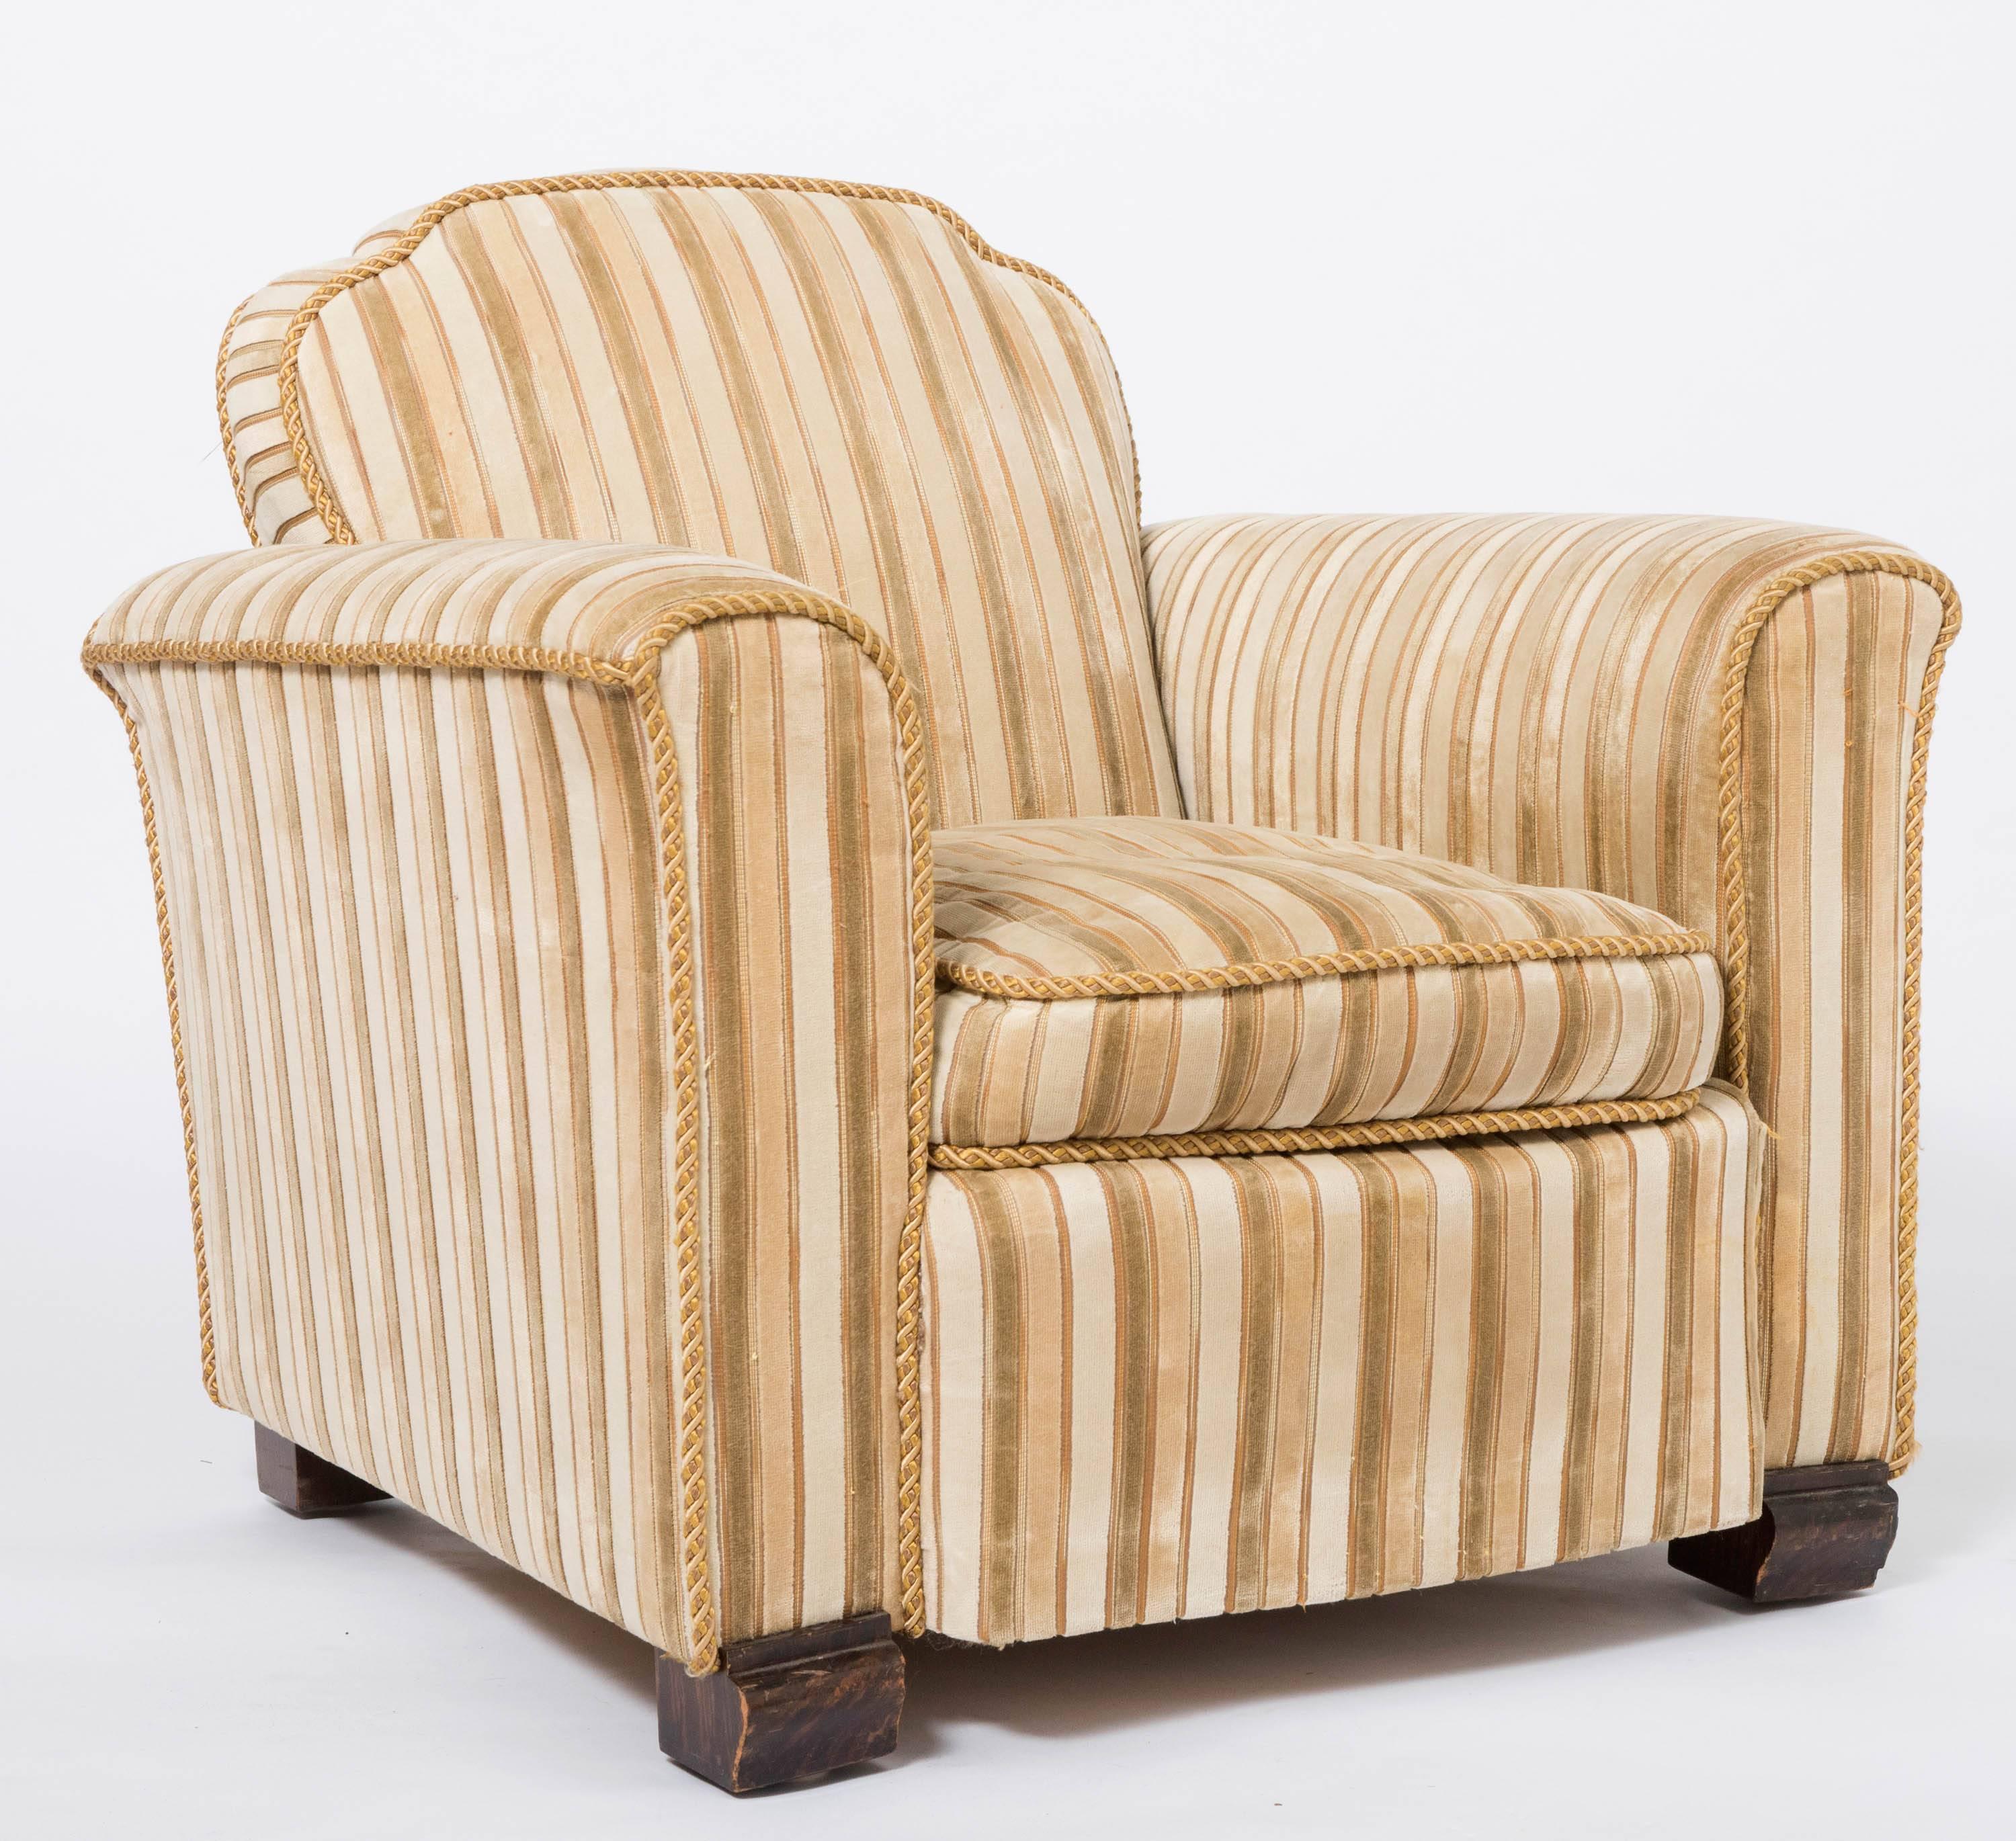 Jules Leleu pair of armchairs with Macassar ebony feet, France circa 1930
New upholstery
Measures: 79 cm high x 84 cm wide x 81 cm deep
Seat height 38 cm.